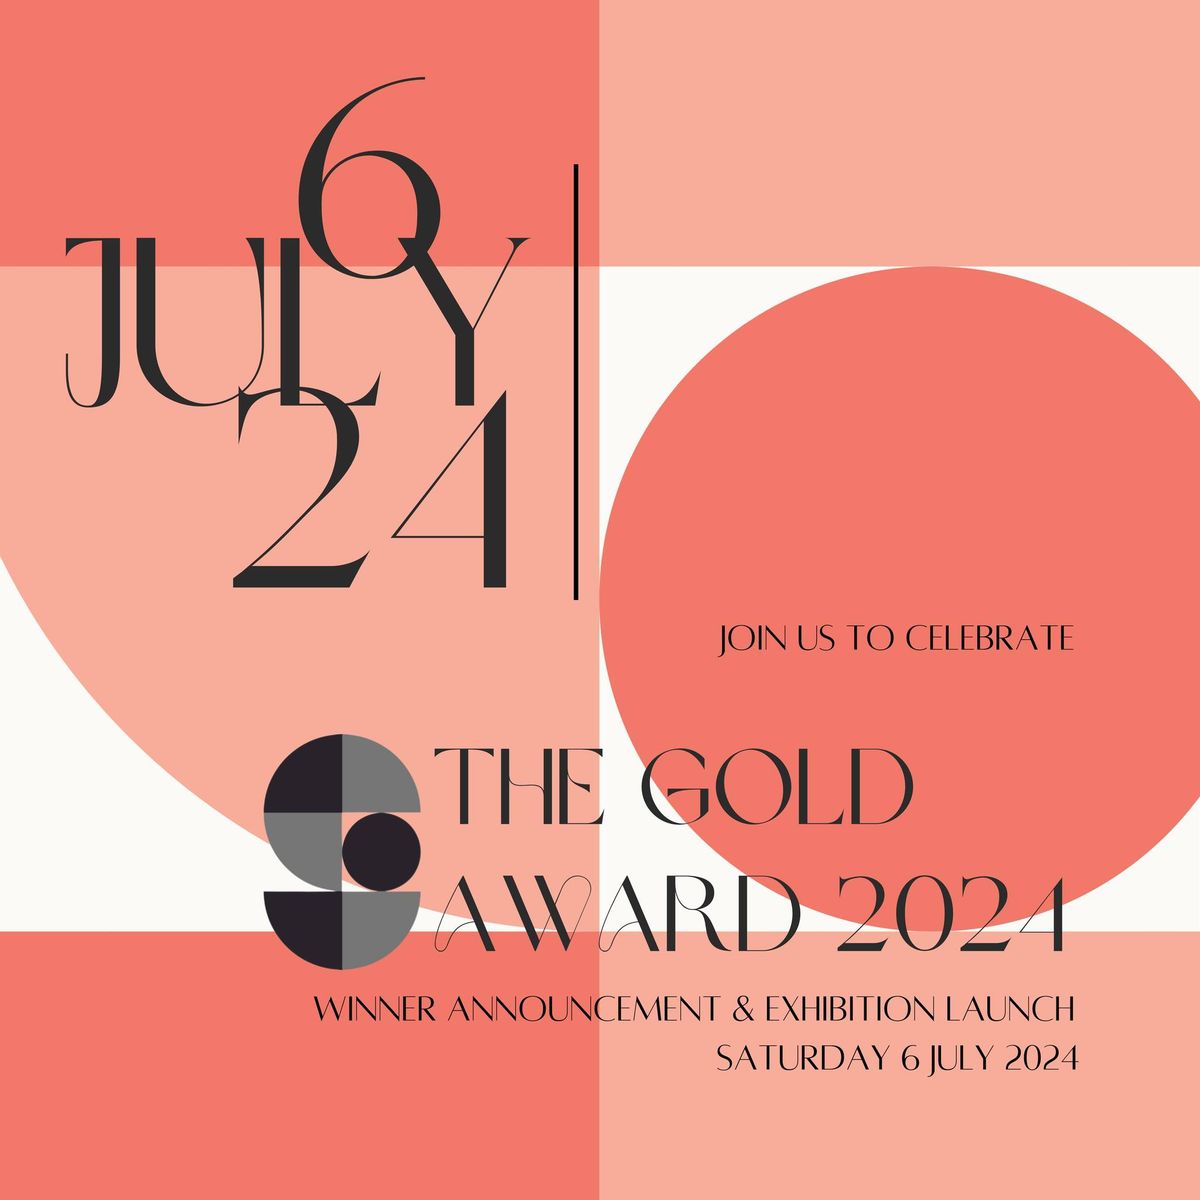 The Gold Award 2024 Winner Announcement & Exhibition Launch